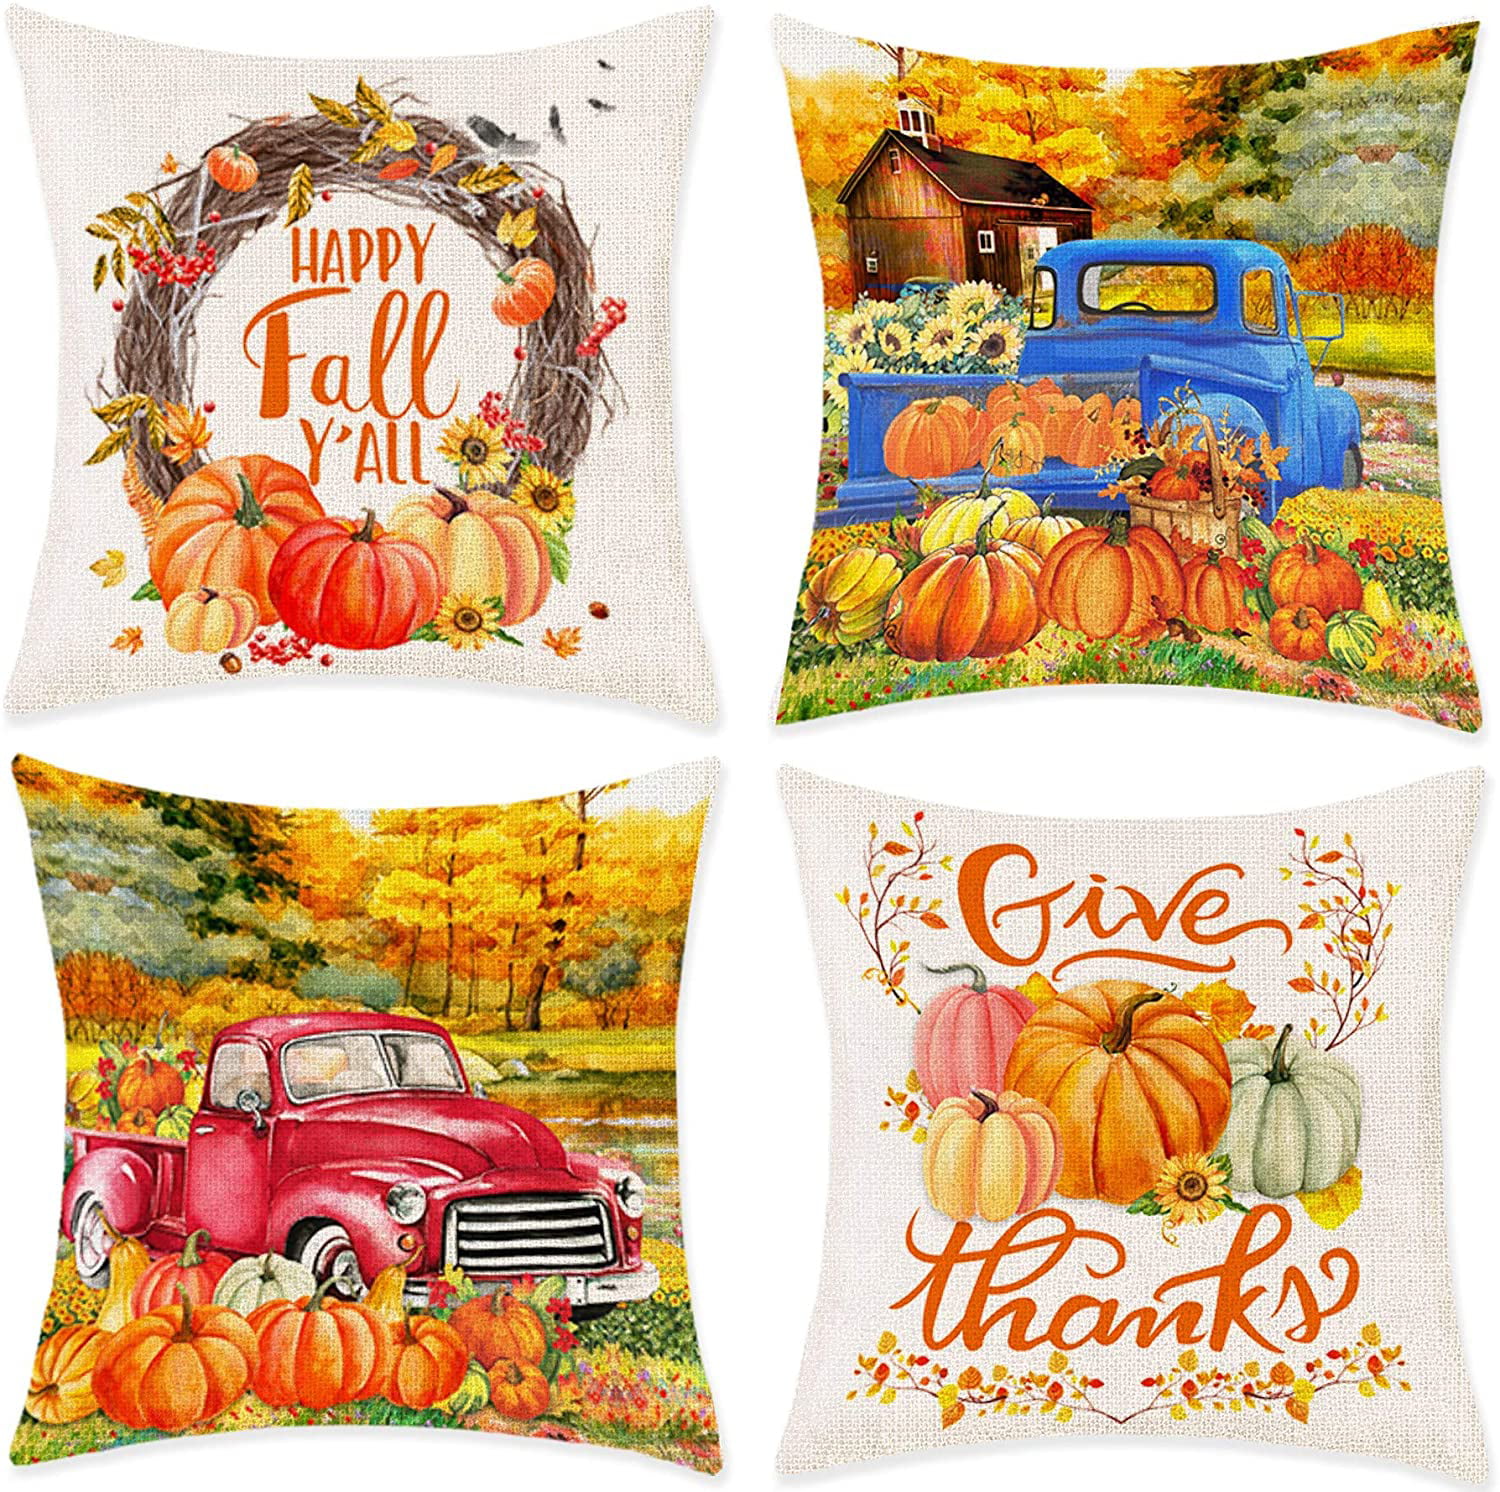 Fall Harvest Thanks Giving Pumpkins Linen Pillow Case Sofa Cushion Cover Decor 